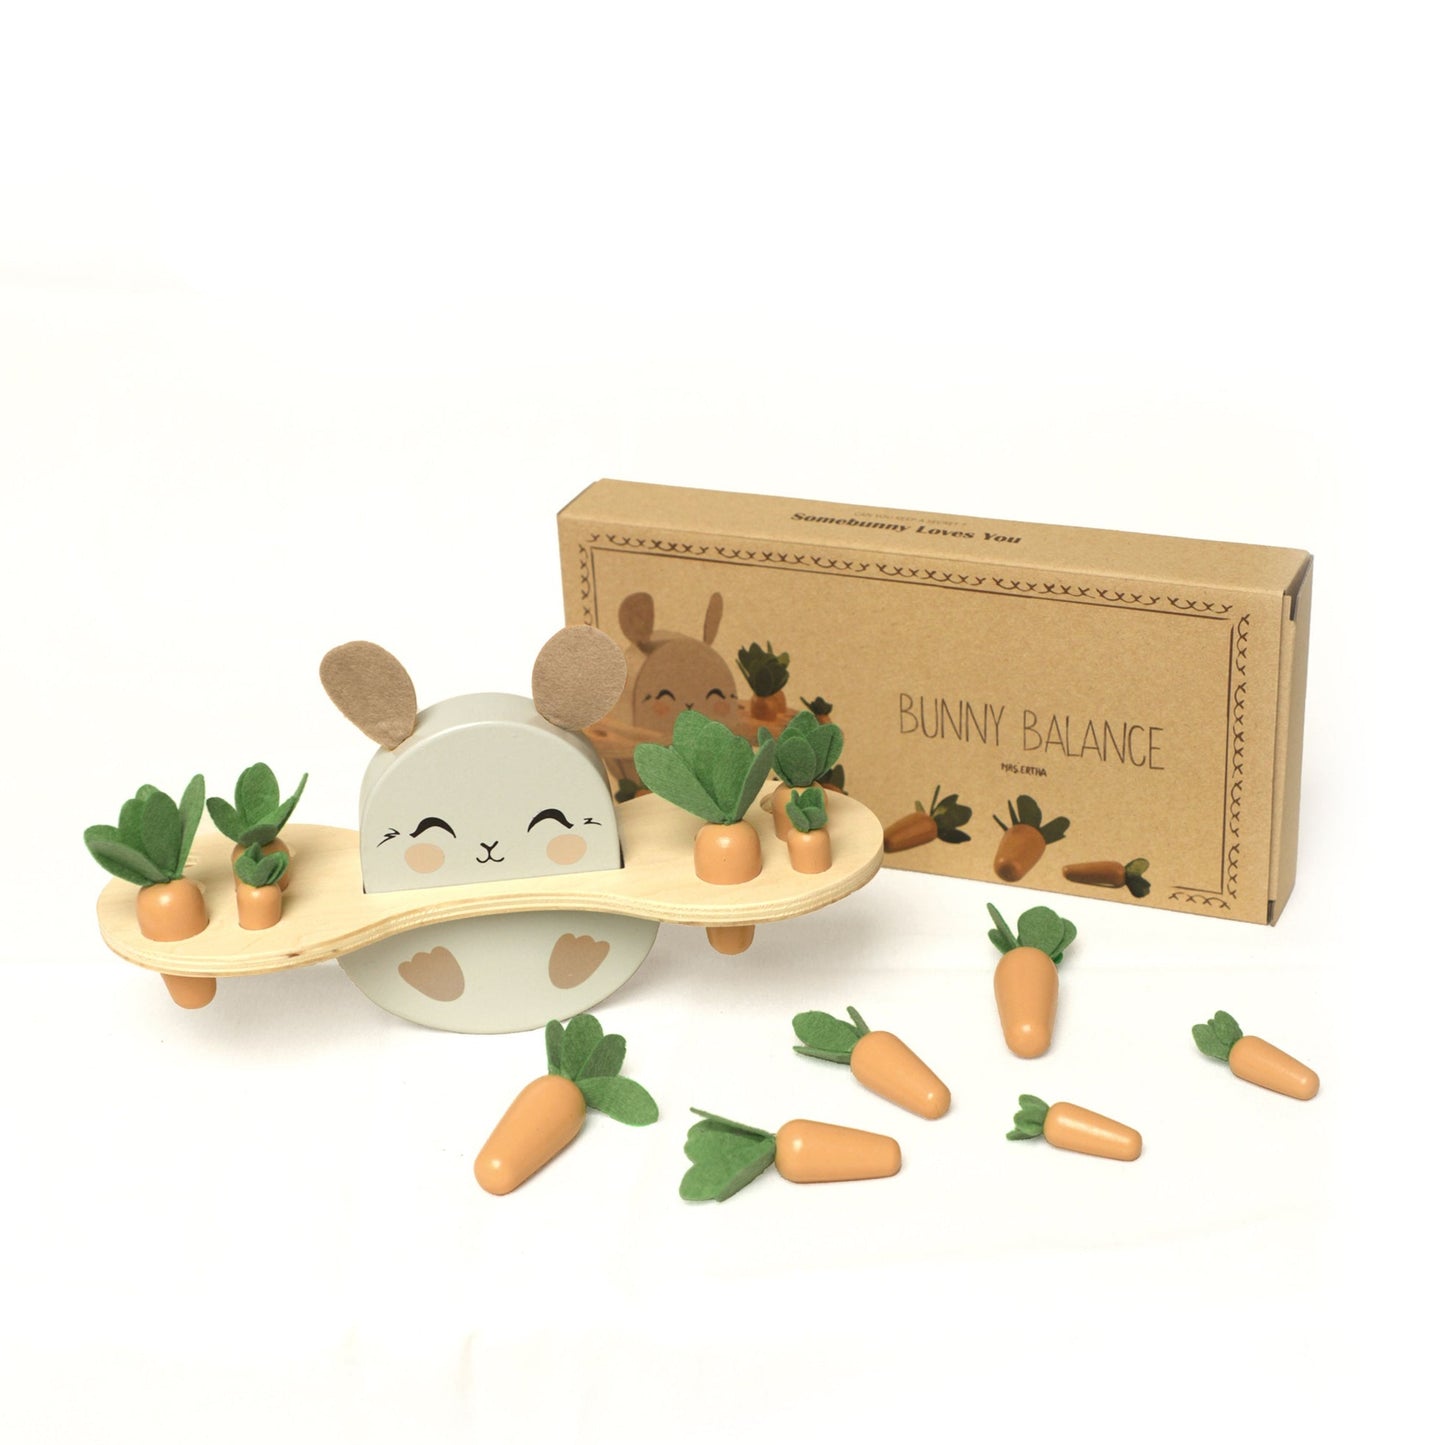 Bunny Balance - Wood puzzle - Bunny balance - wood